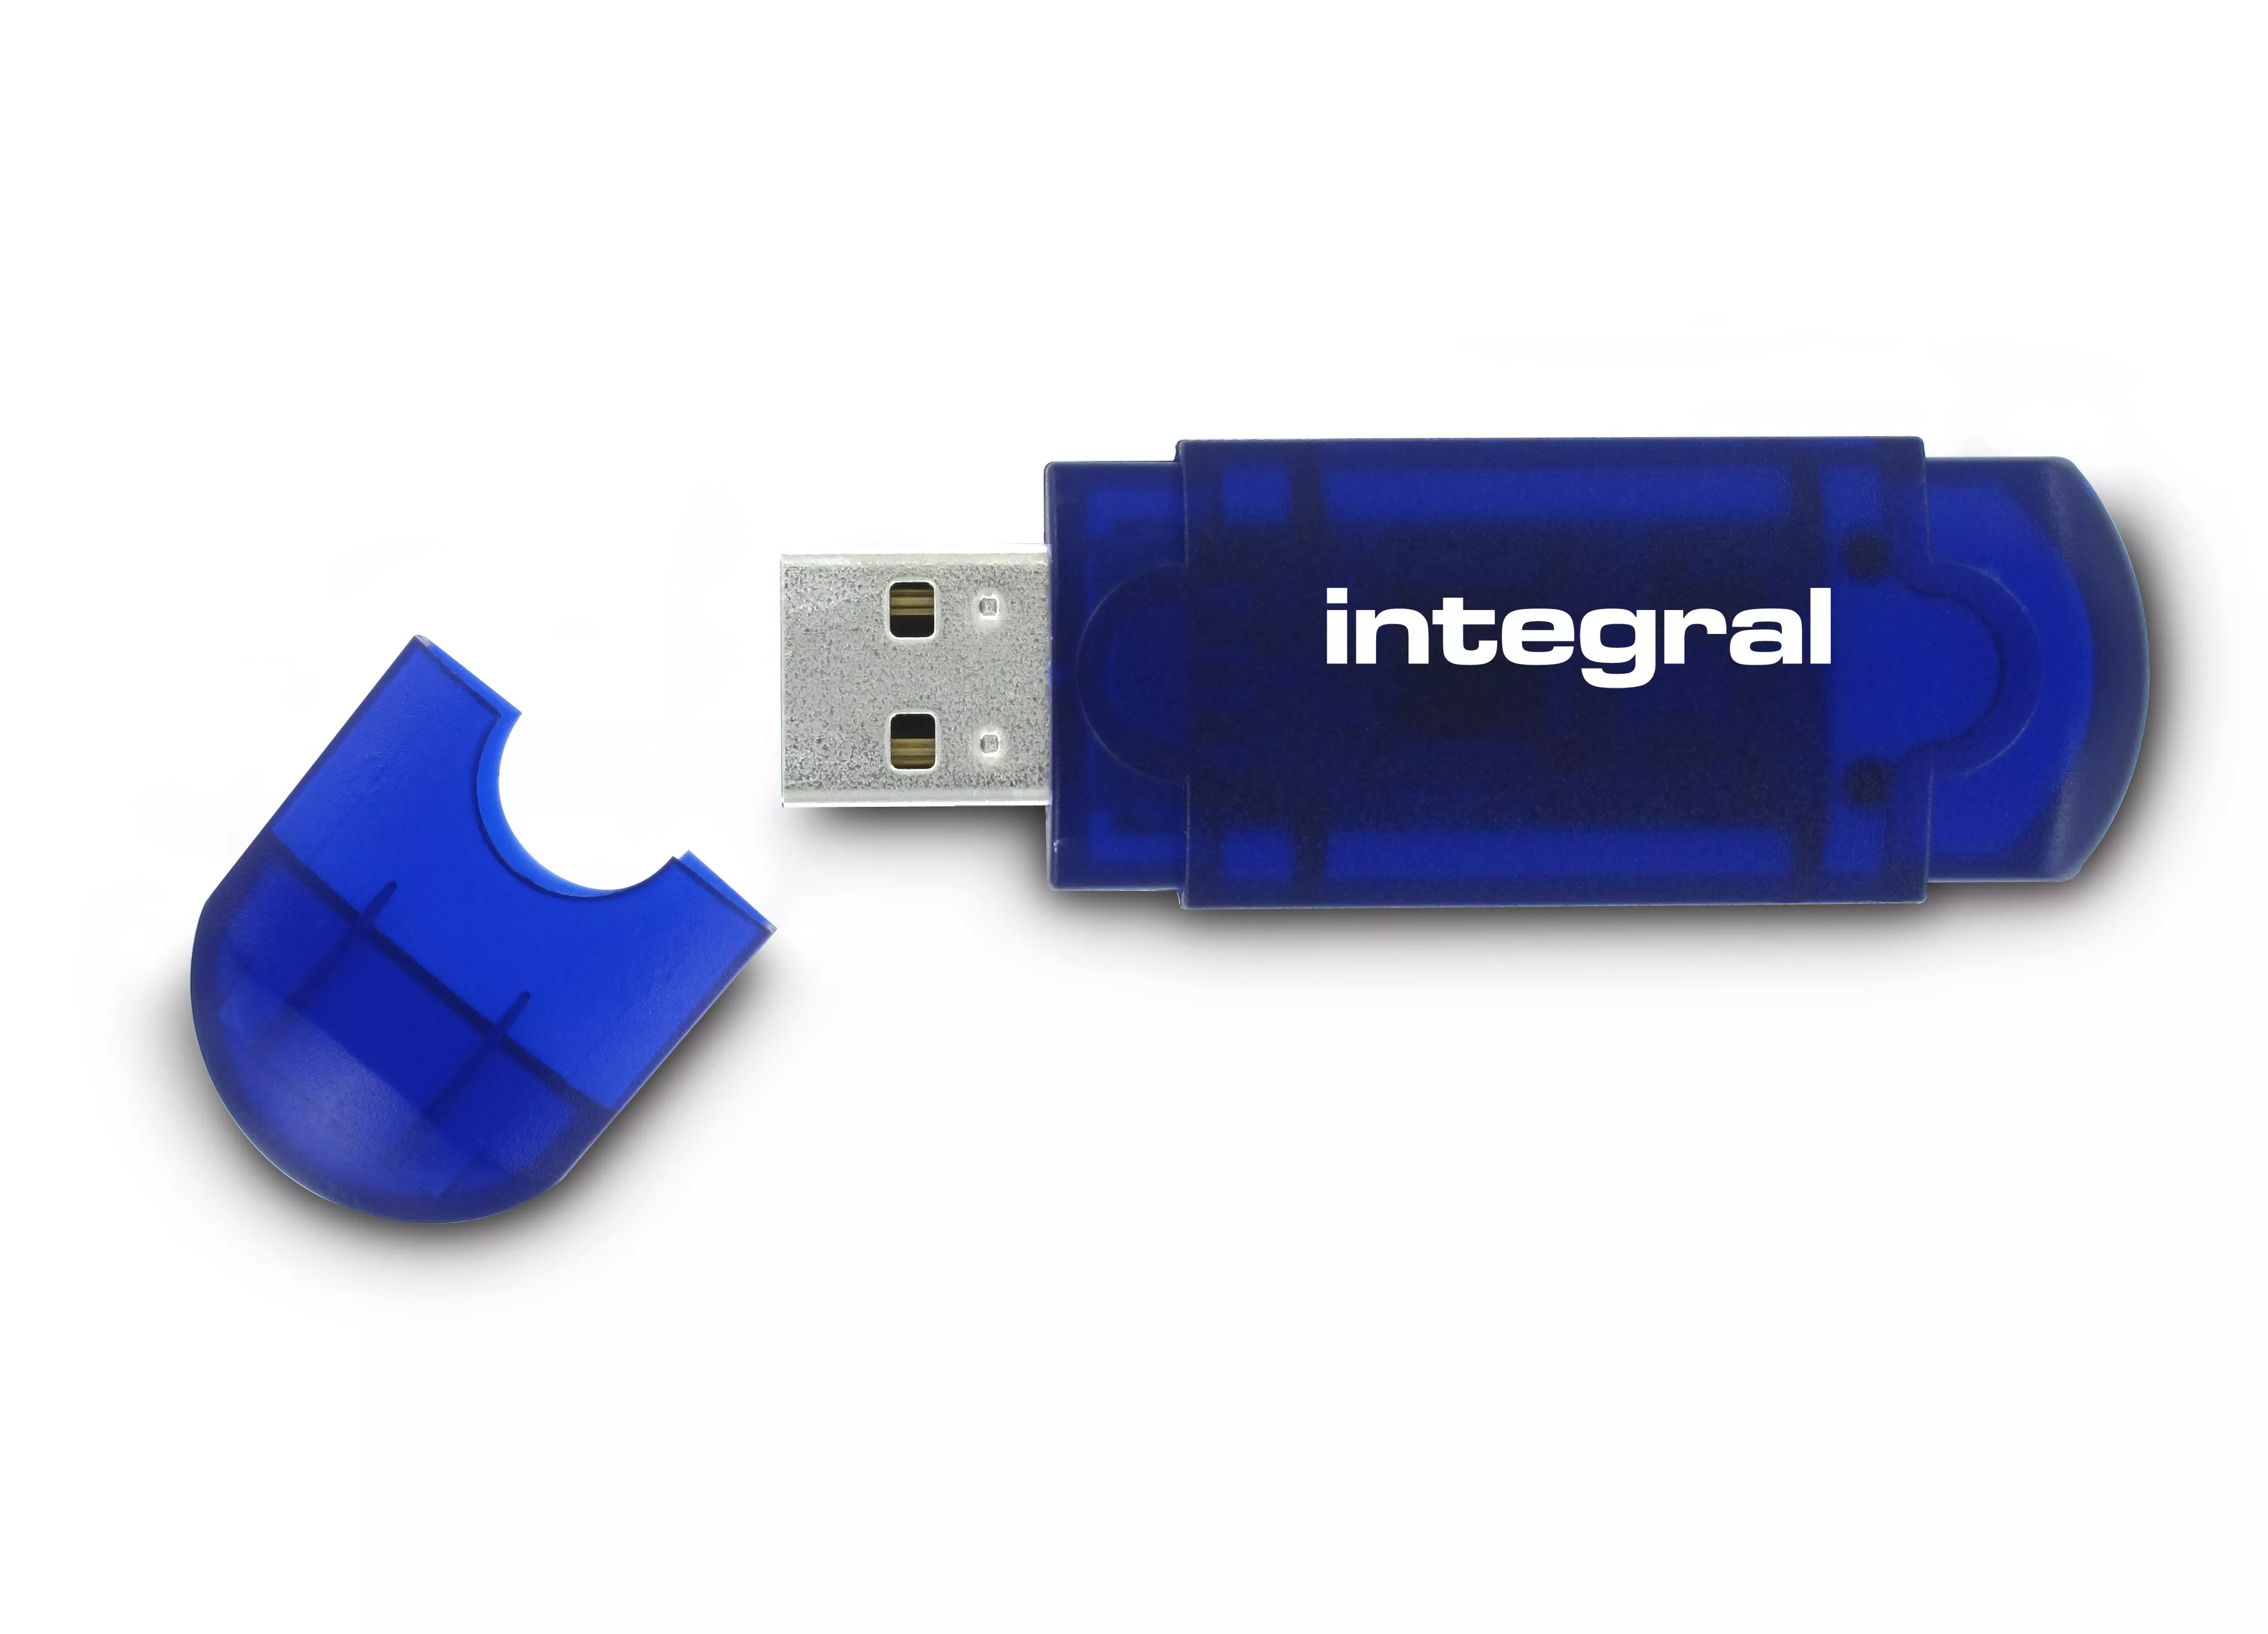 Achat Integral 128GB USB2.0 DRIVE EVO BLUE INTEGRAL au meilleur prix